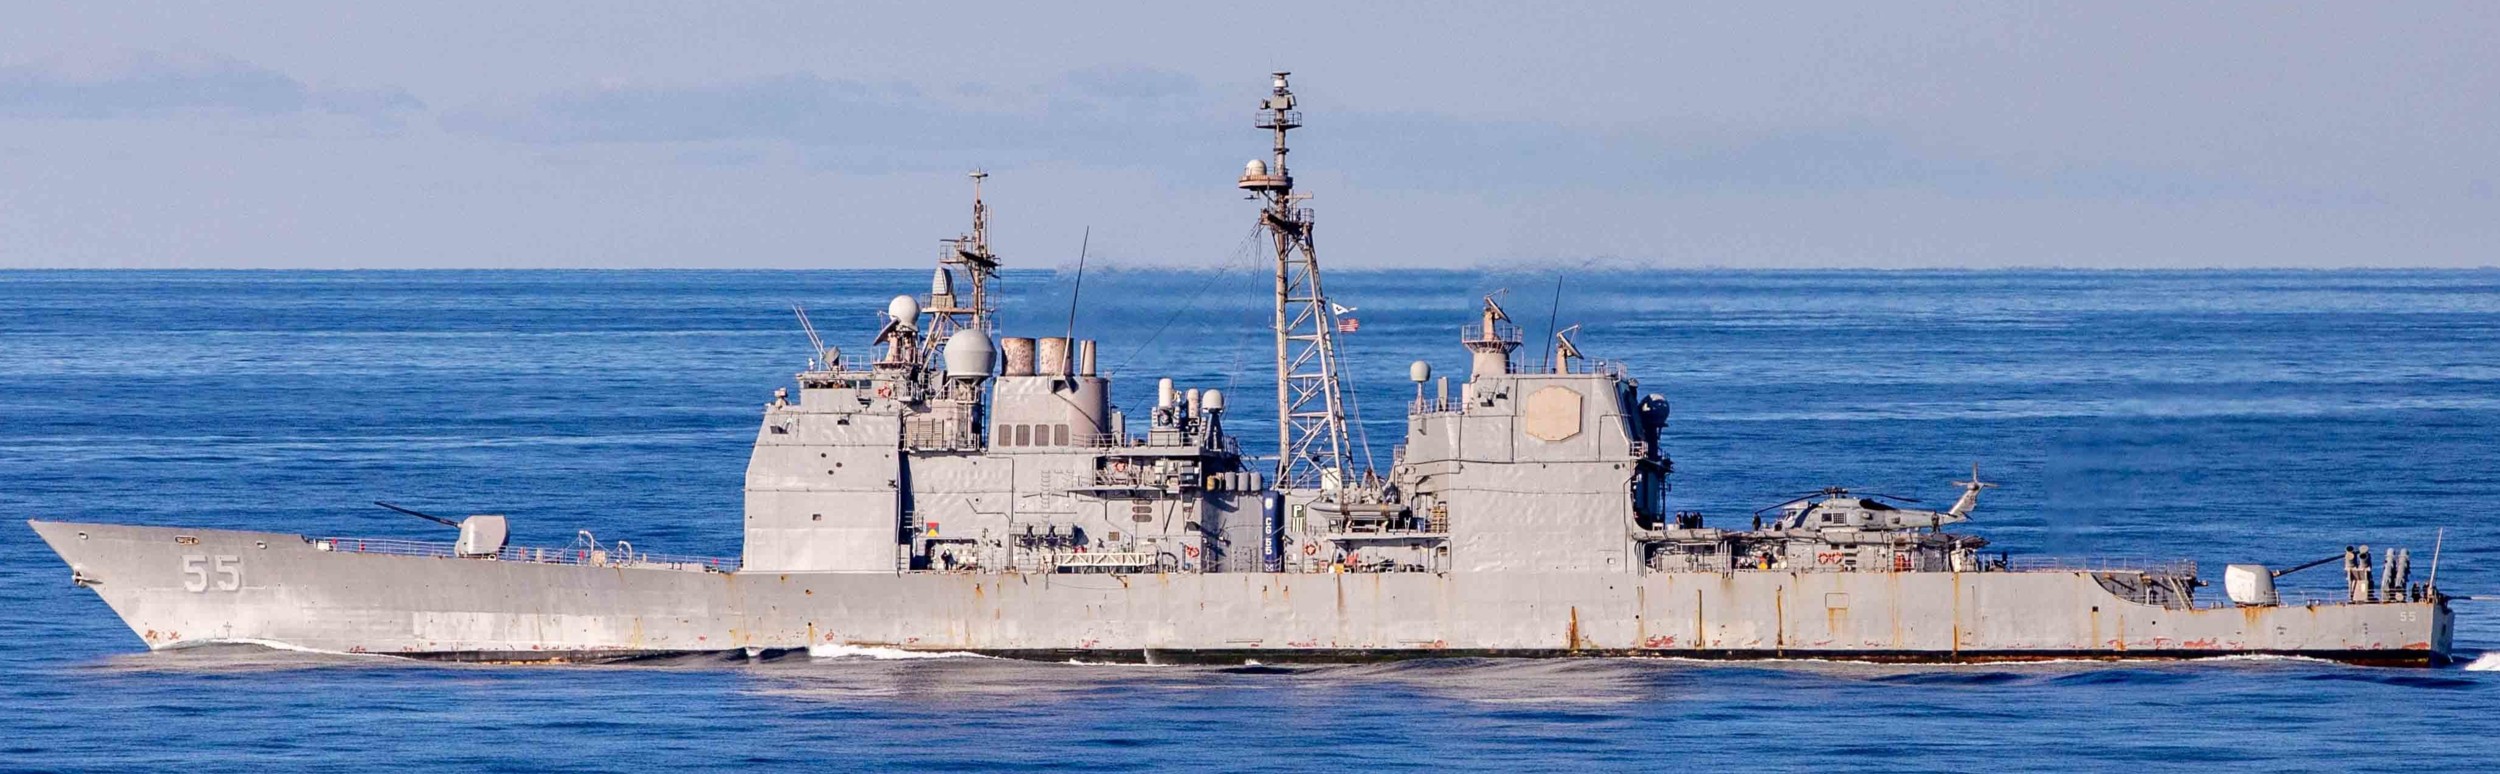 cg-55 uss leyte gulf ticonderoga class guided missile cruiser aegis us navy adriatic sea 87